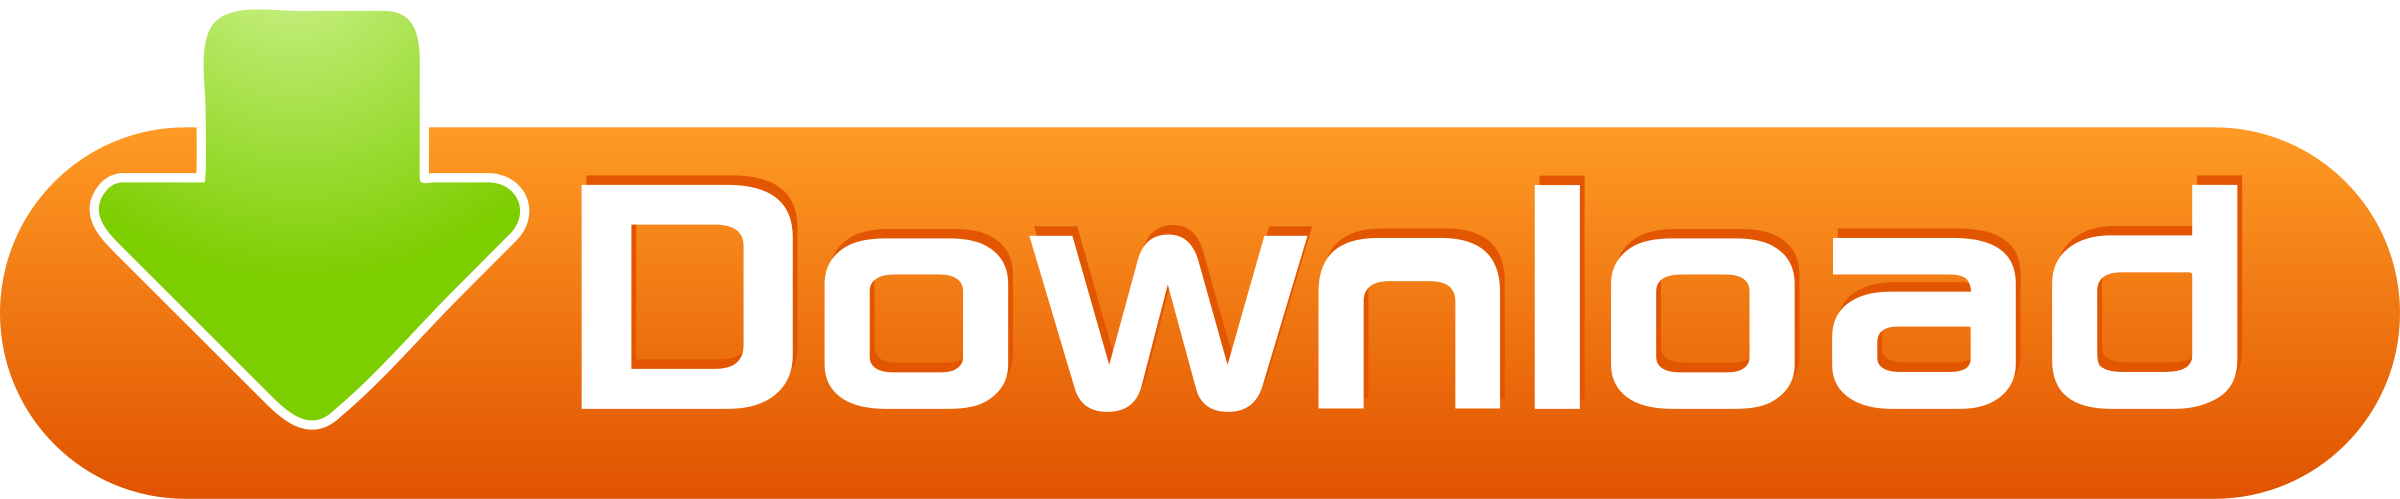 Now button orange mart. Download png images